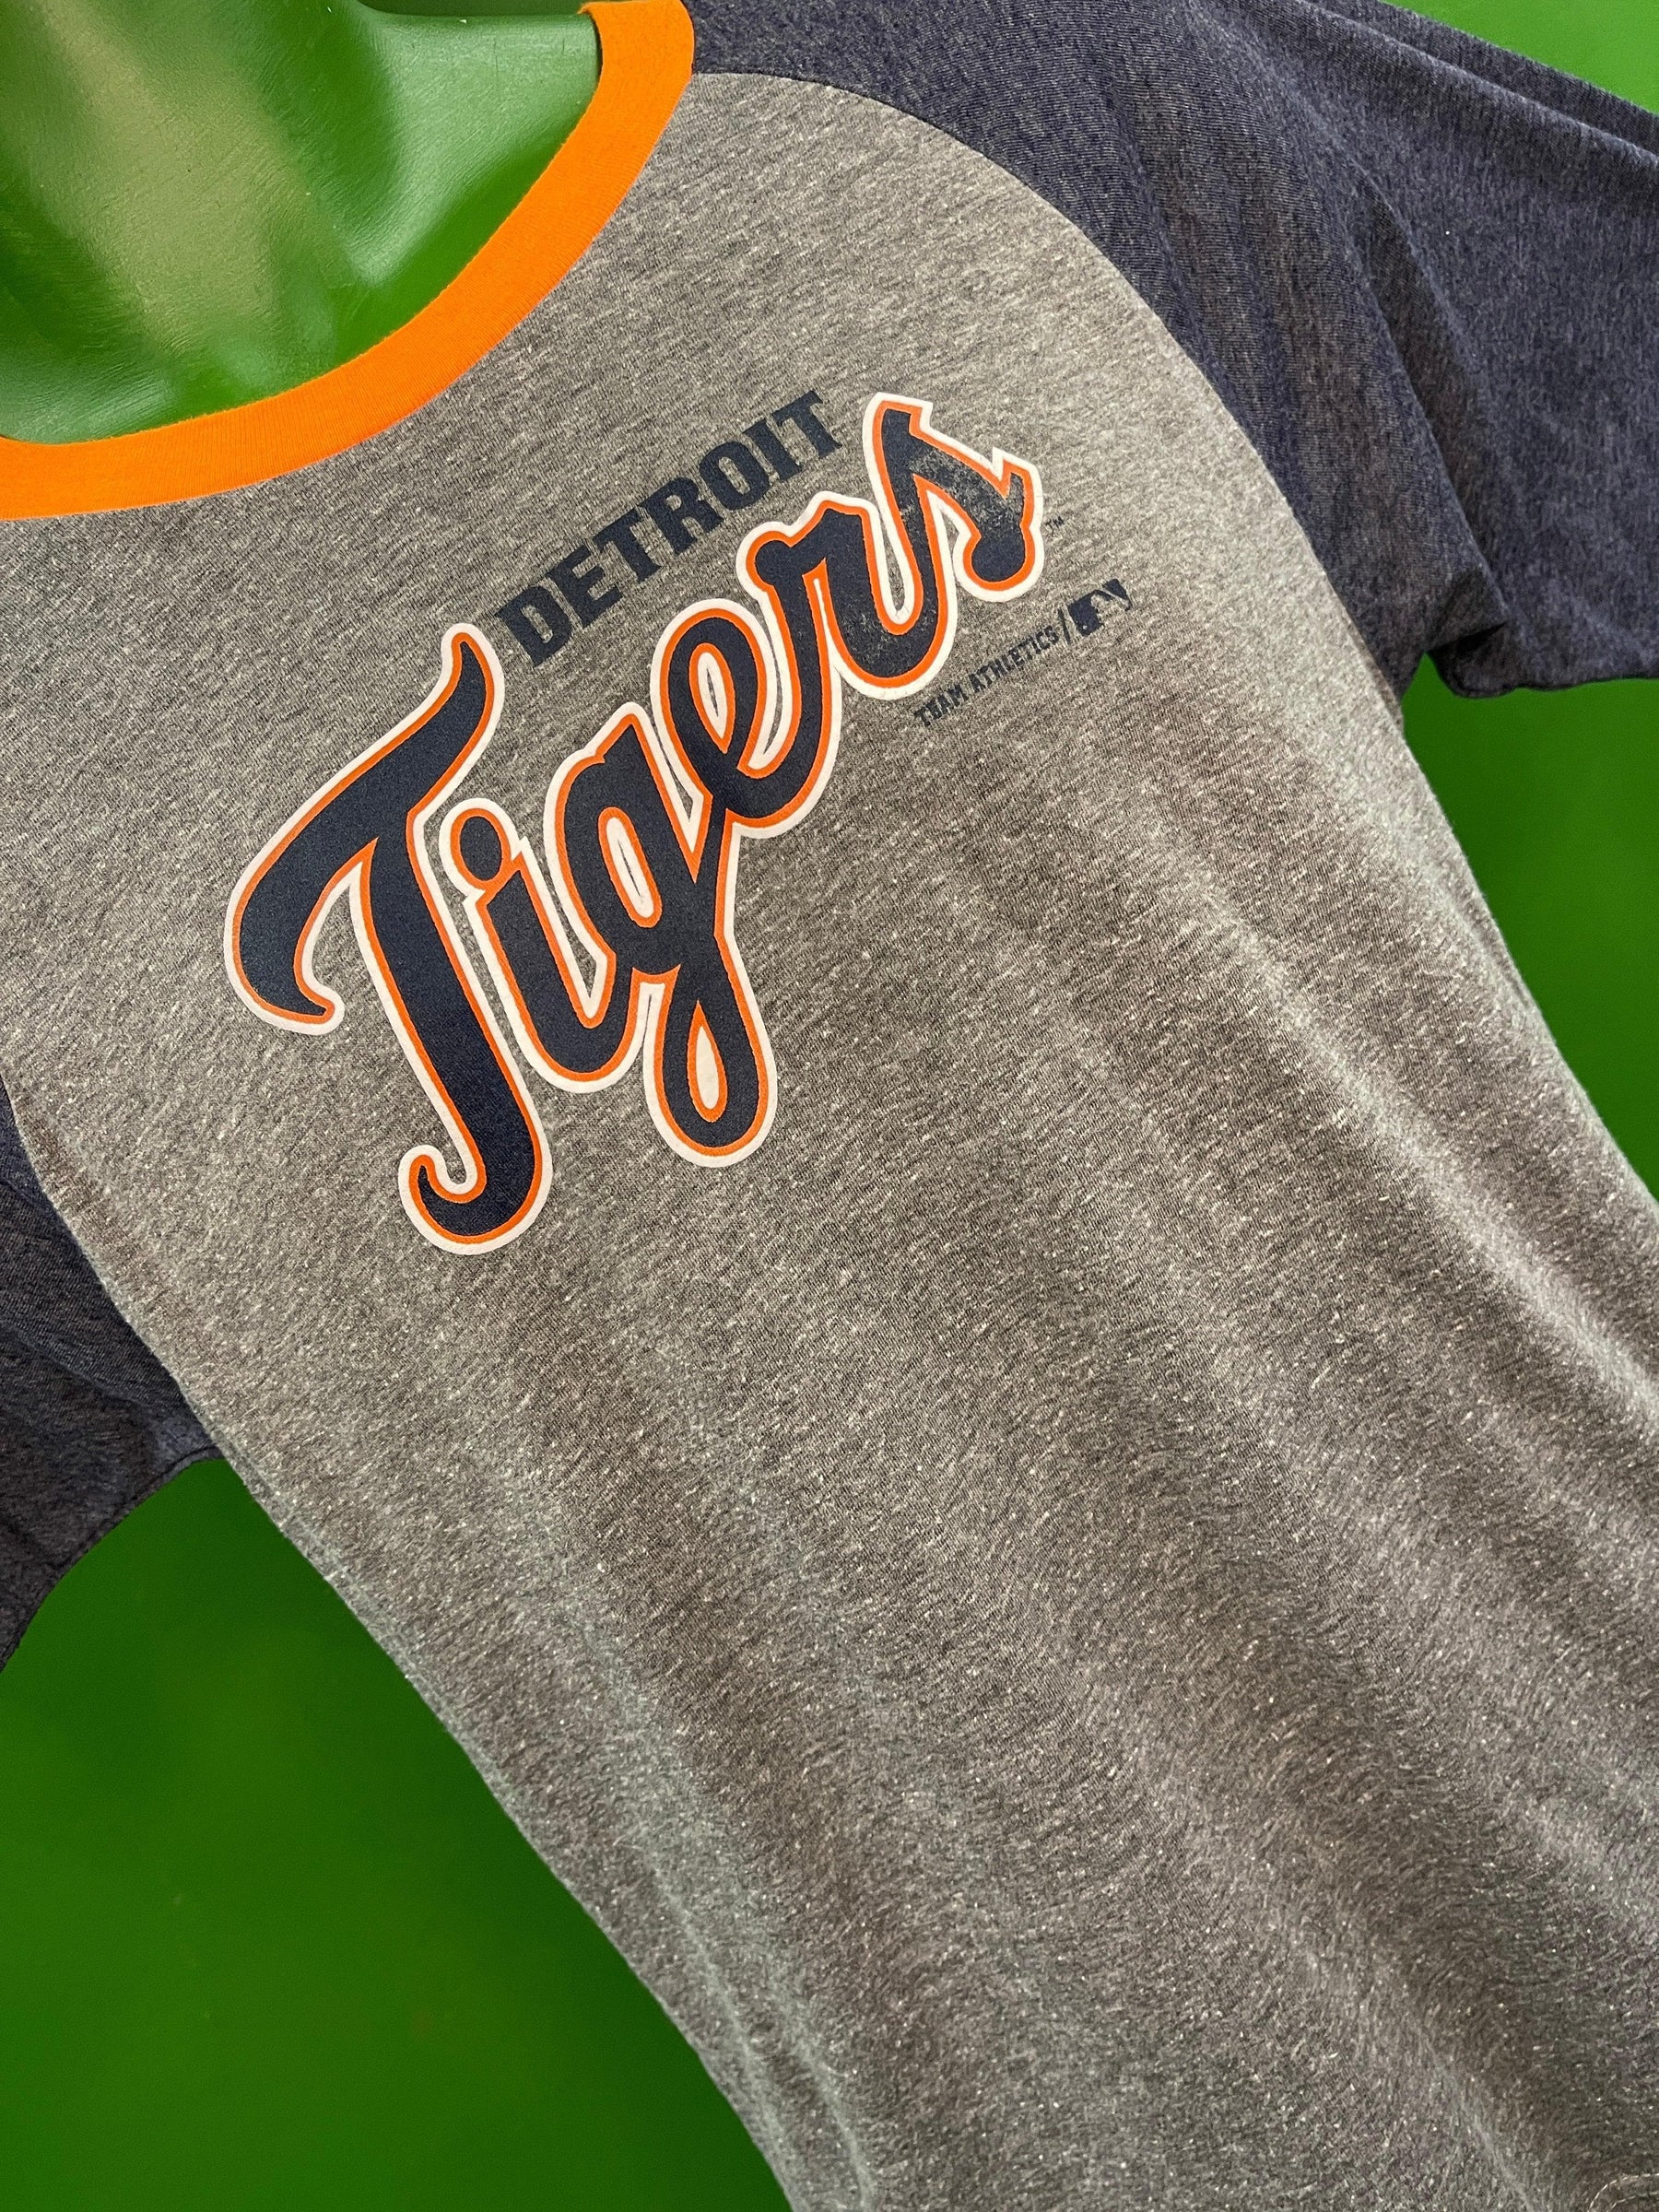 MLB Detroit Tigers Grey Colourblock T-Shirt Youth Large 12-14